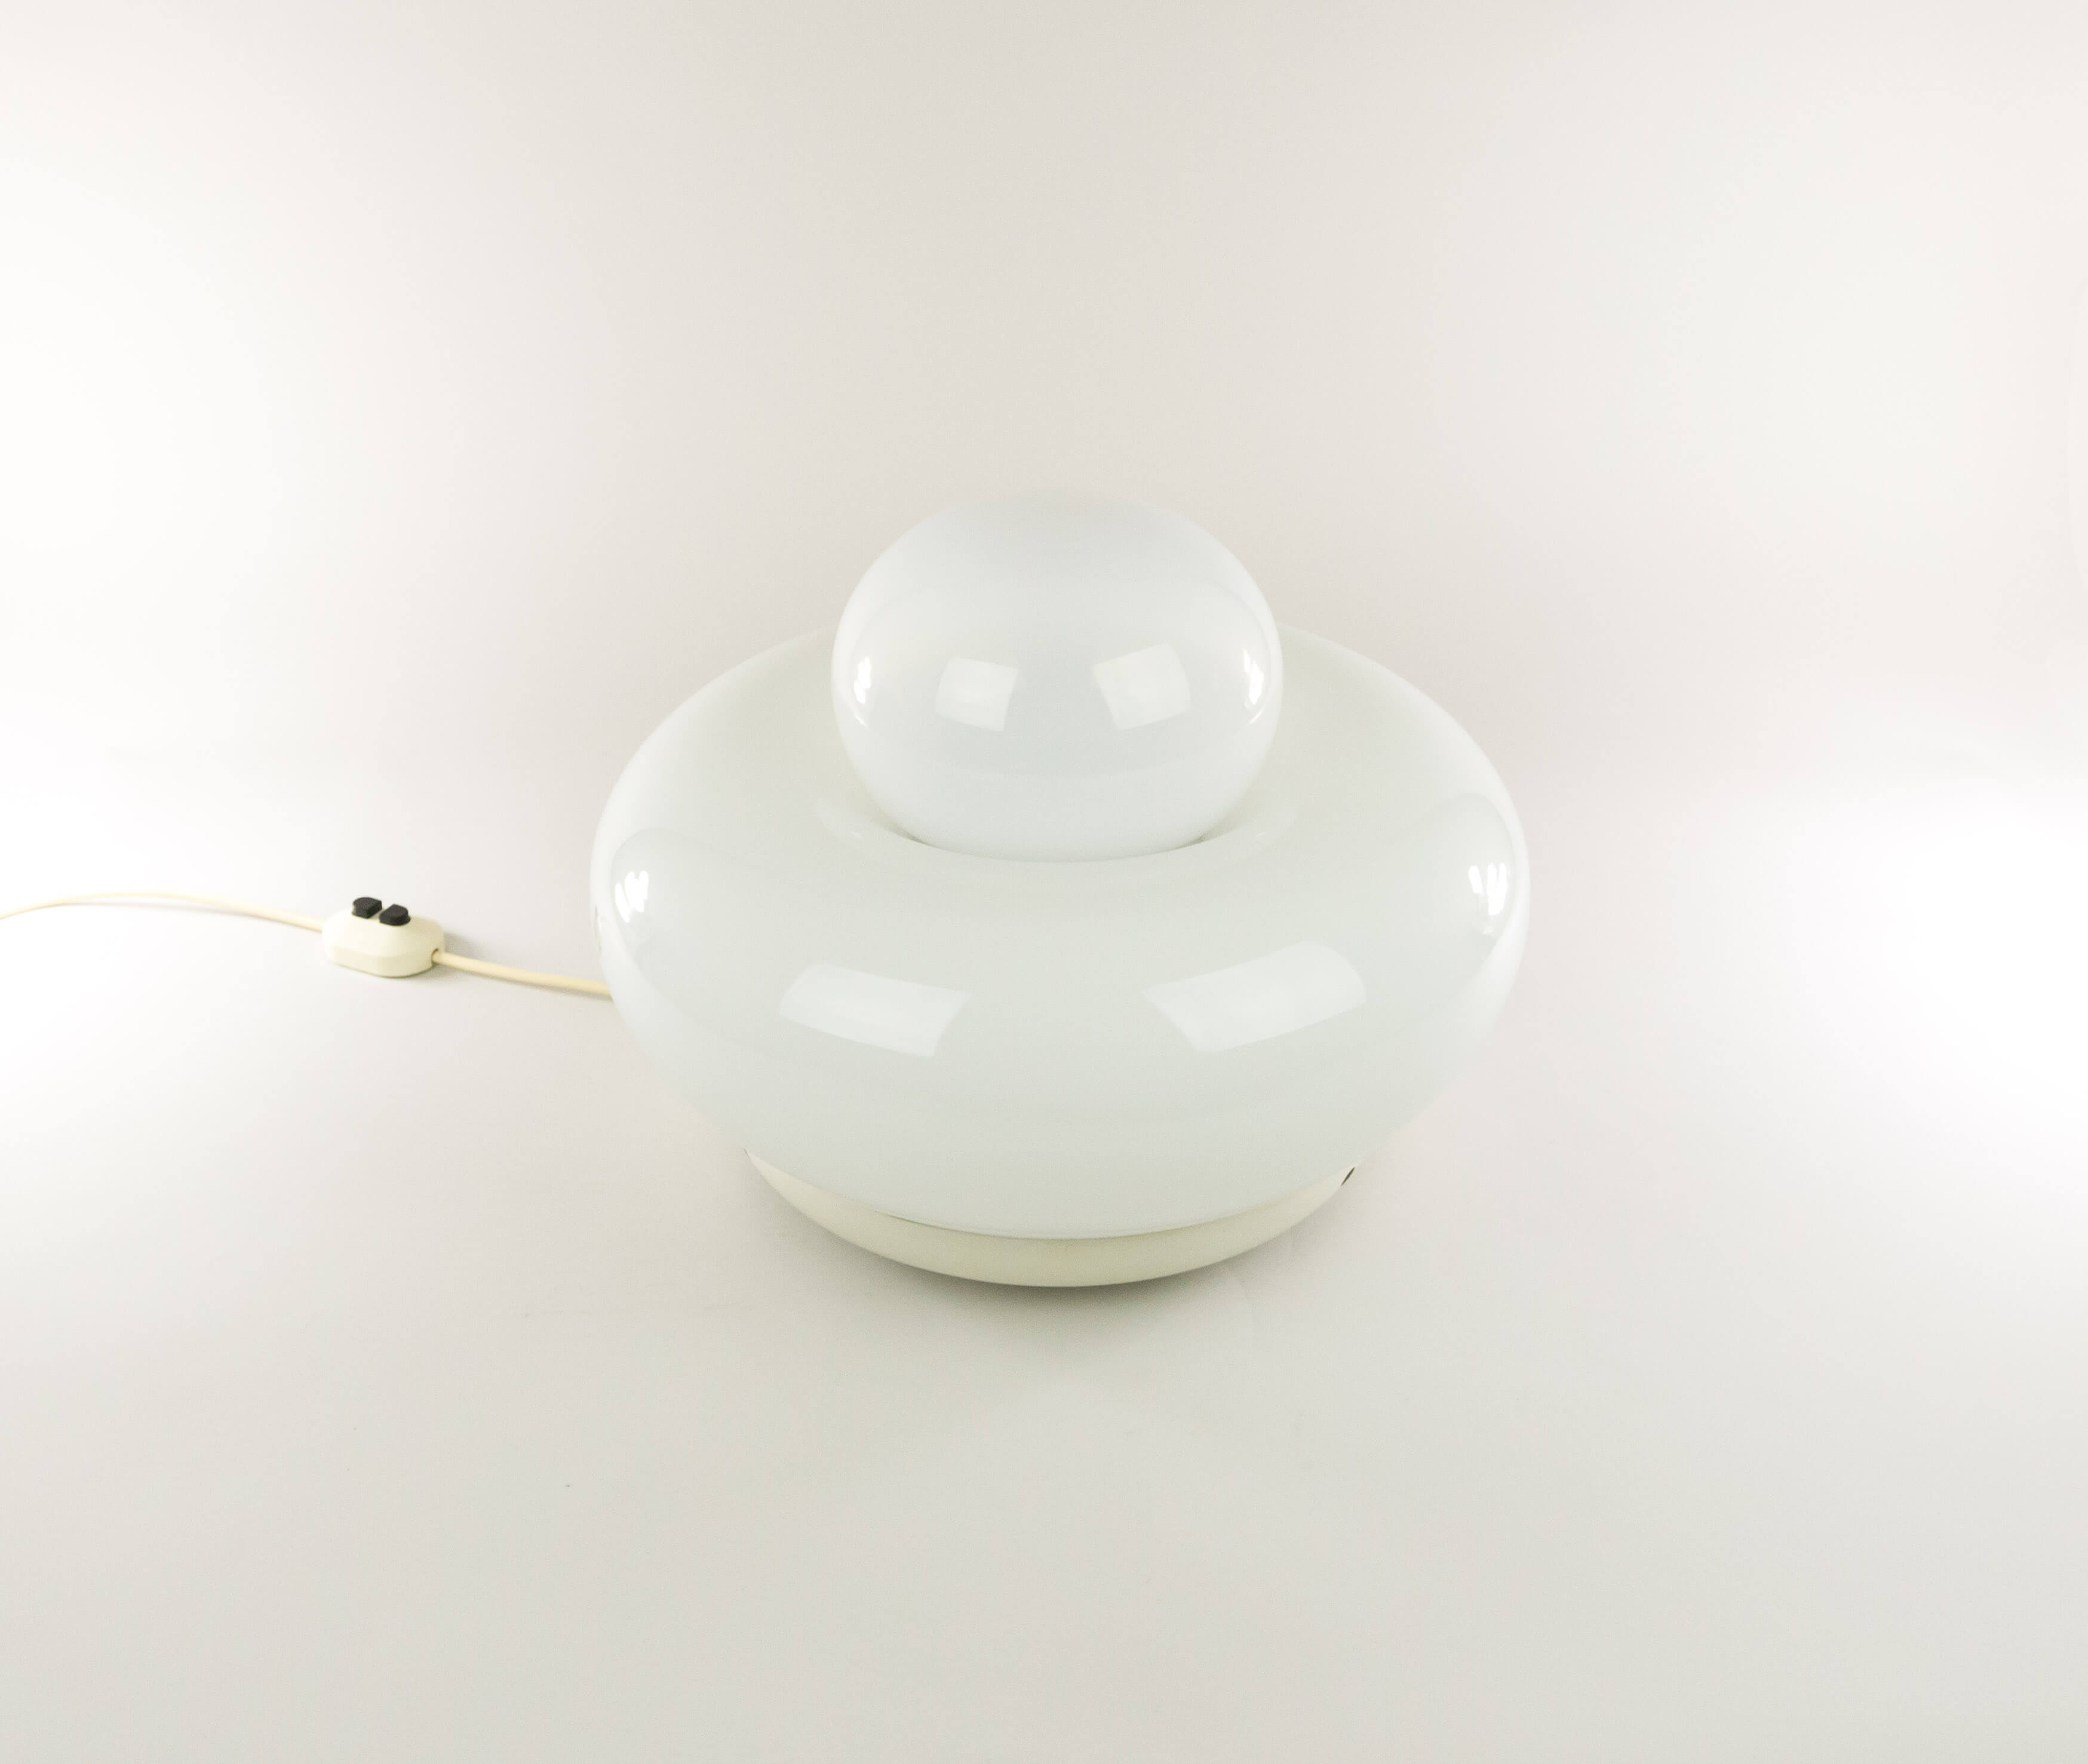 An Opaline Glass Italian Table Lamp by Giuliana Gramigna For Artimide